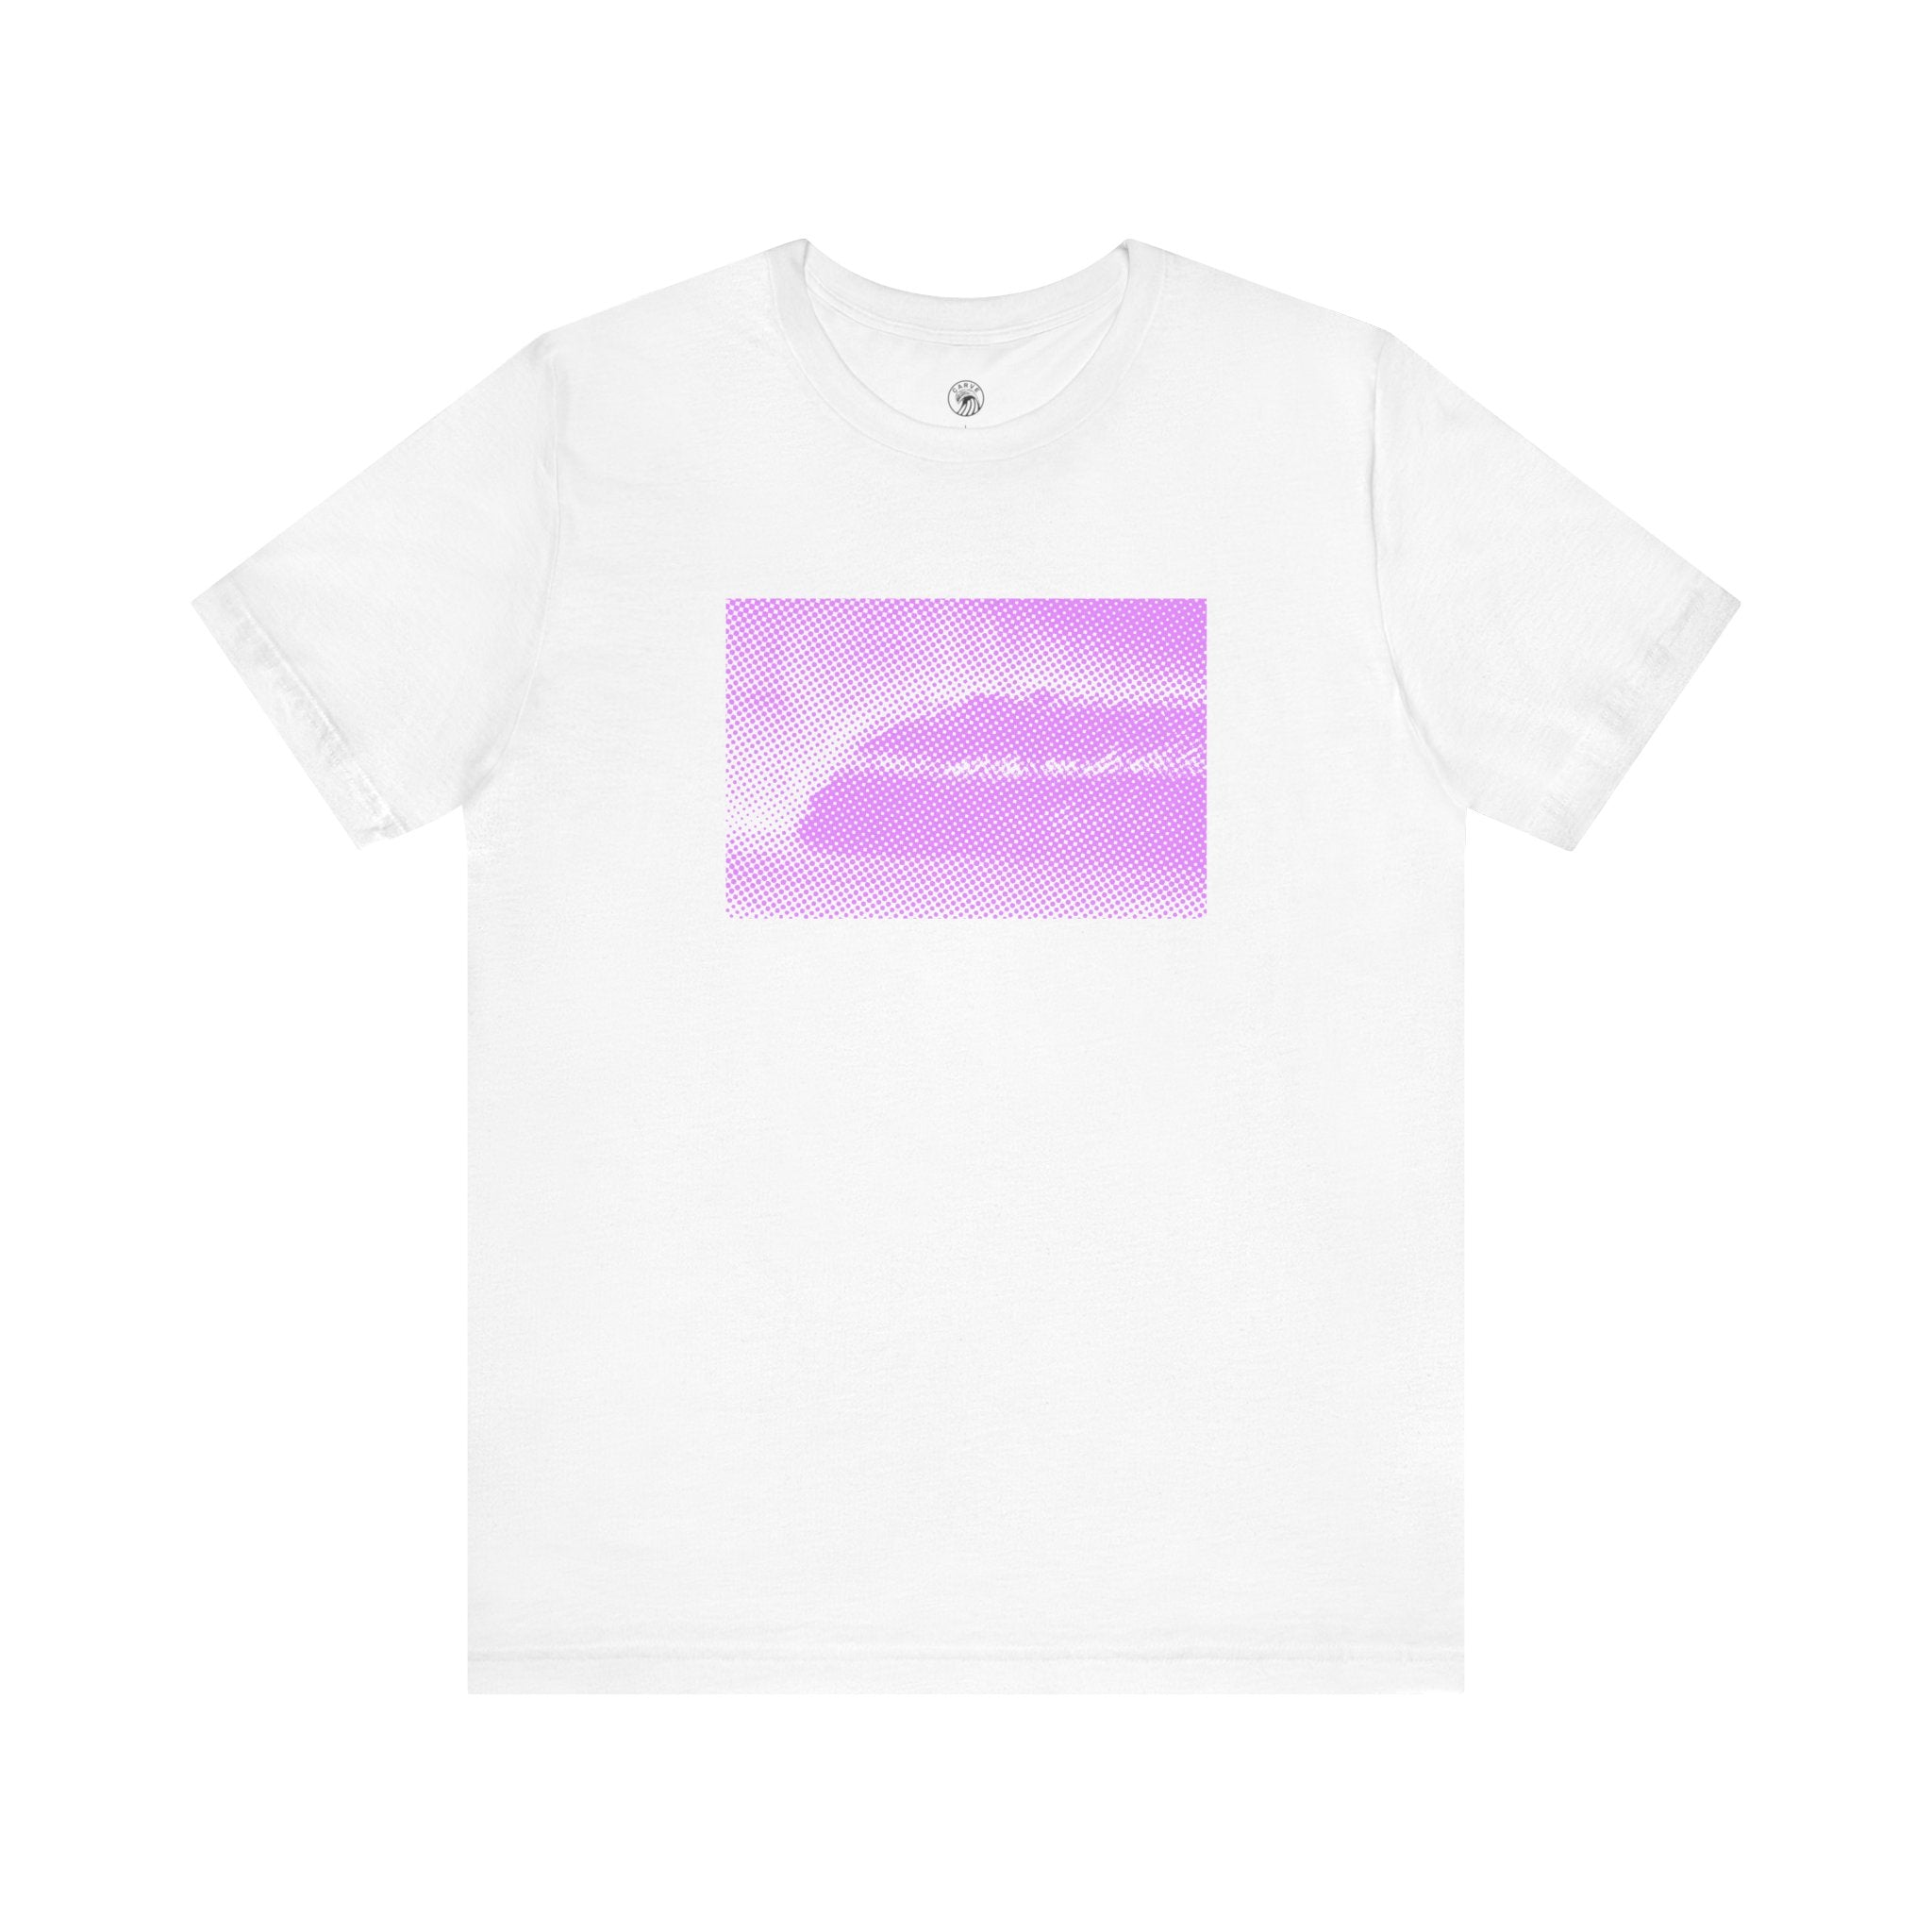 T-shirt: Miami Vice Left